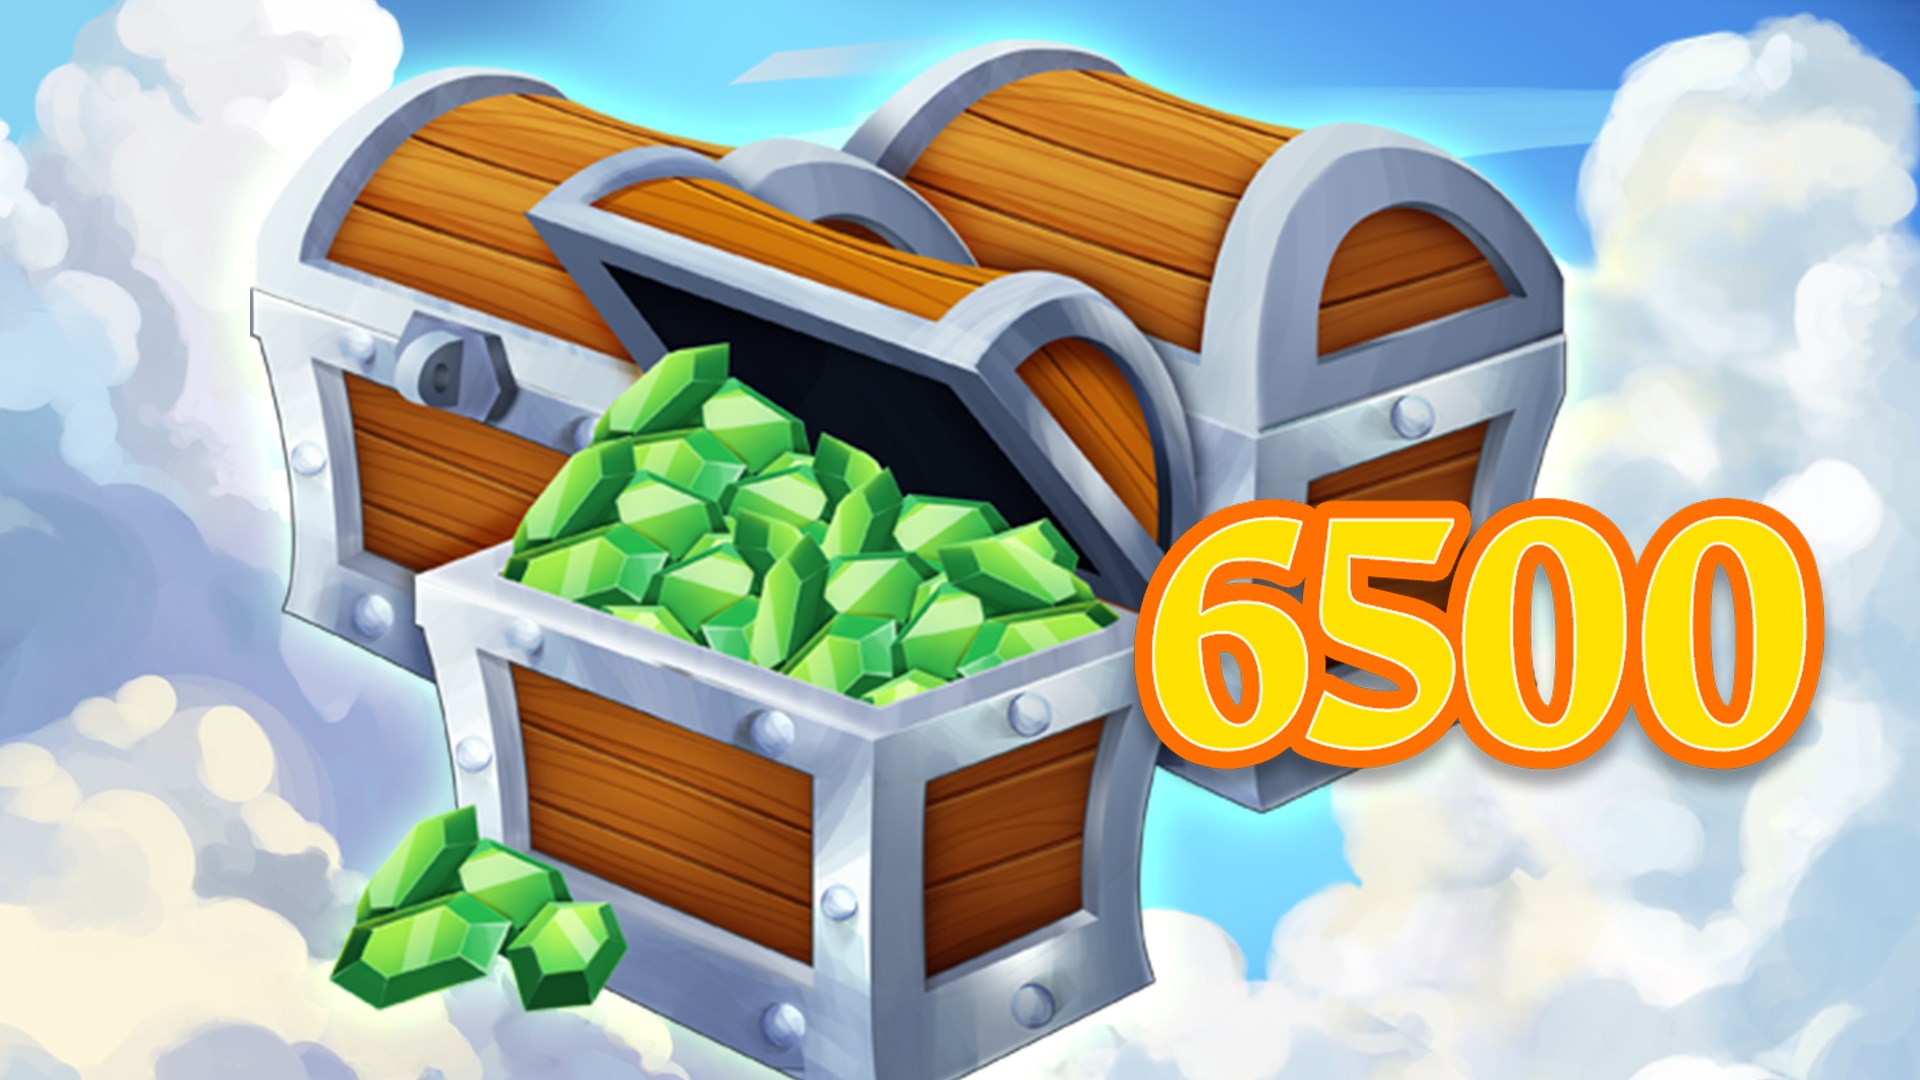 Pirate's Bounty of Gems (6500 Gems)